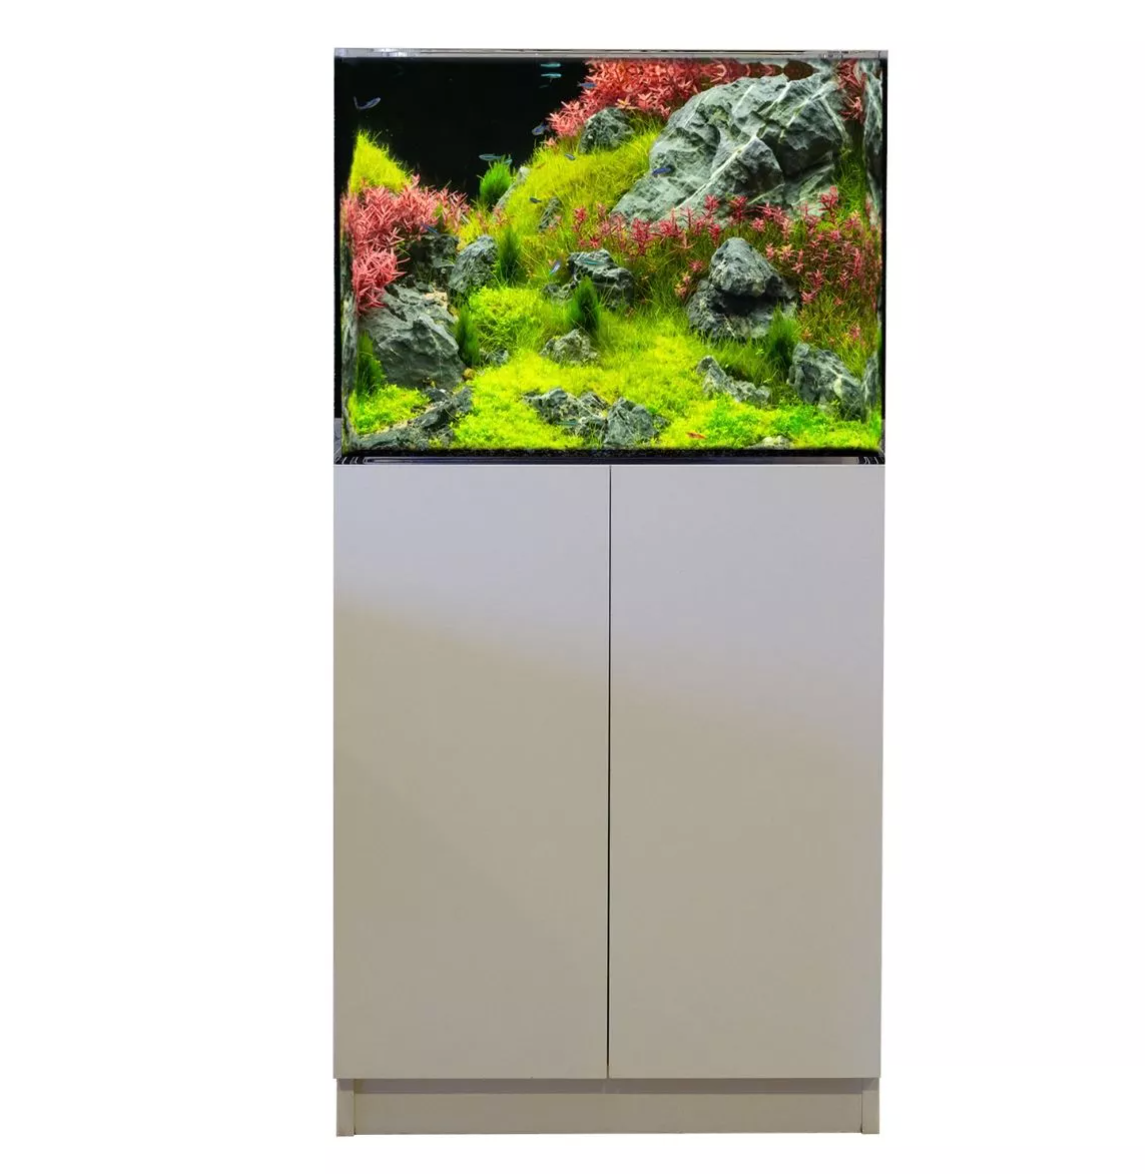 37.5 Gallon Acrylic Freshwater Aquarium by LiquidArt